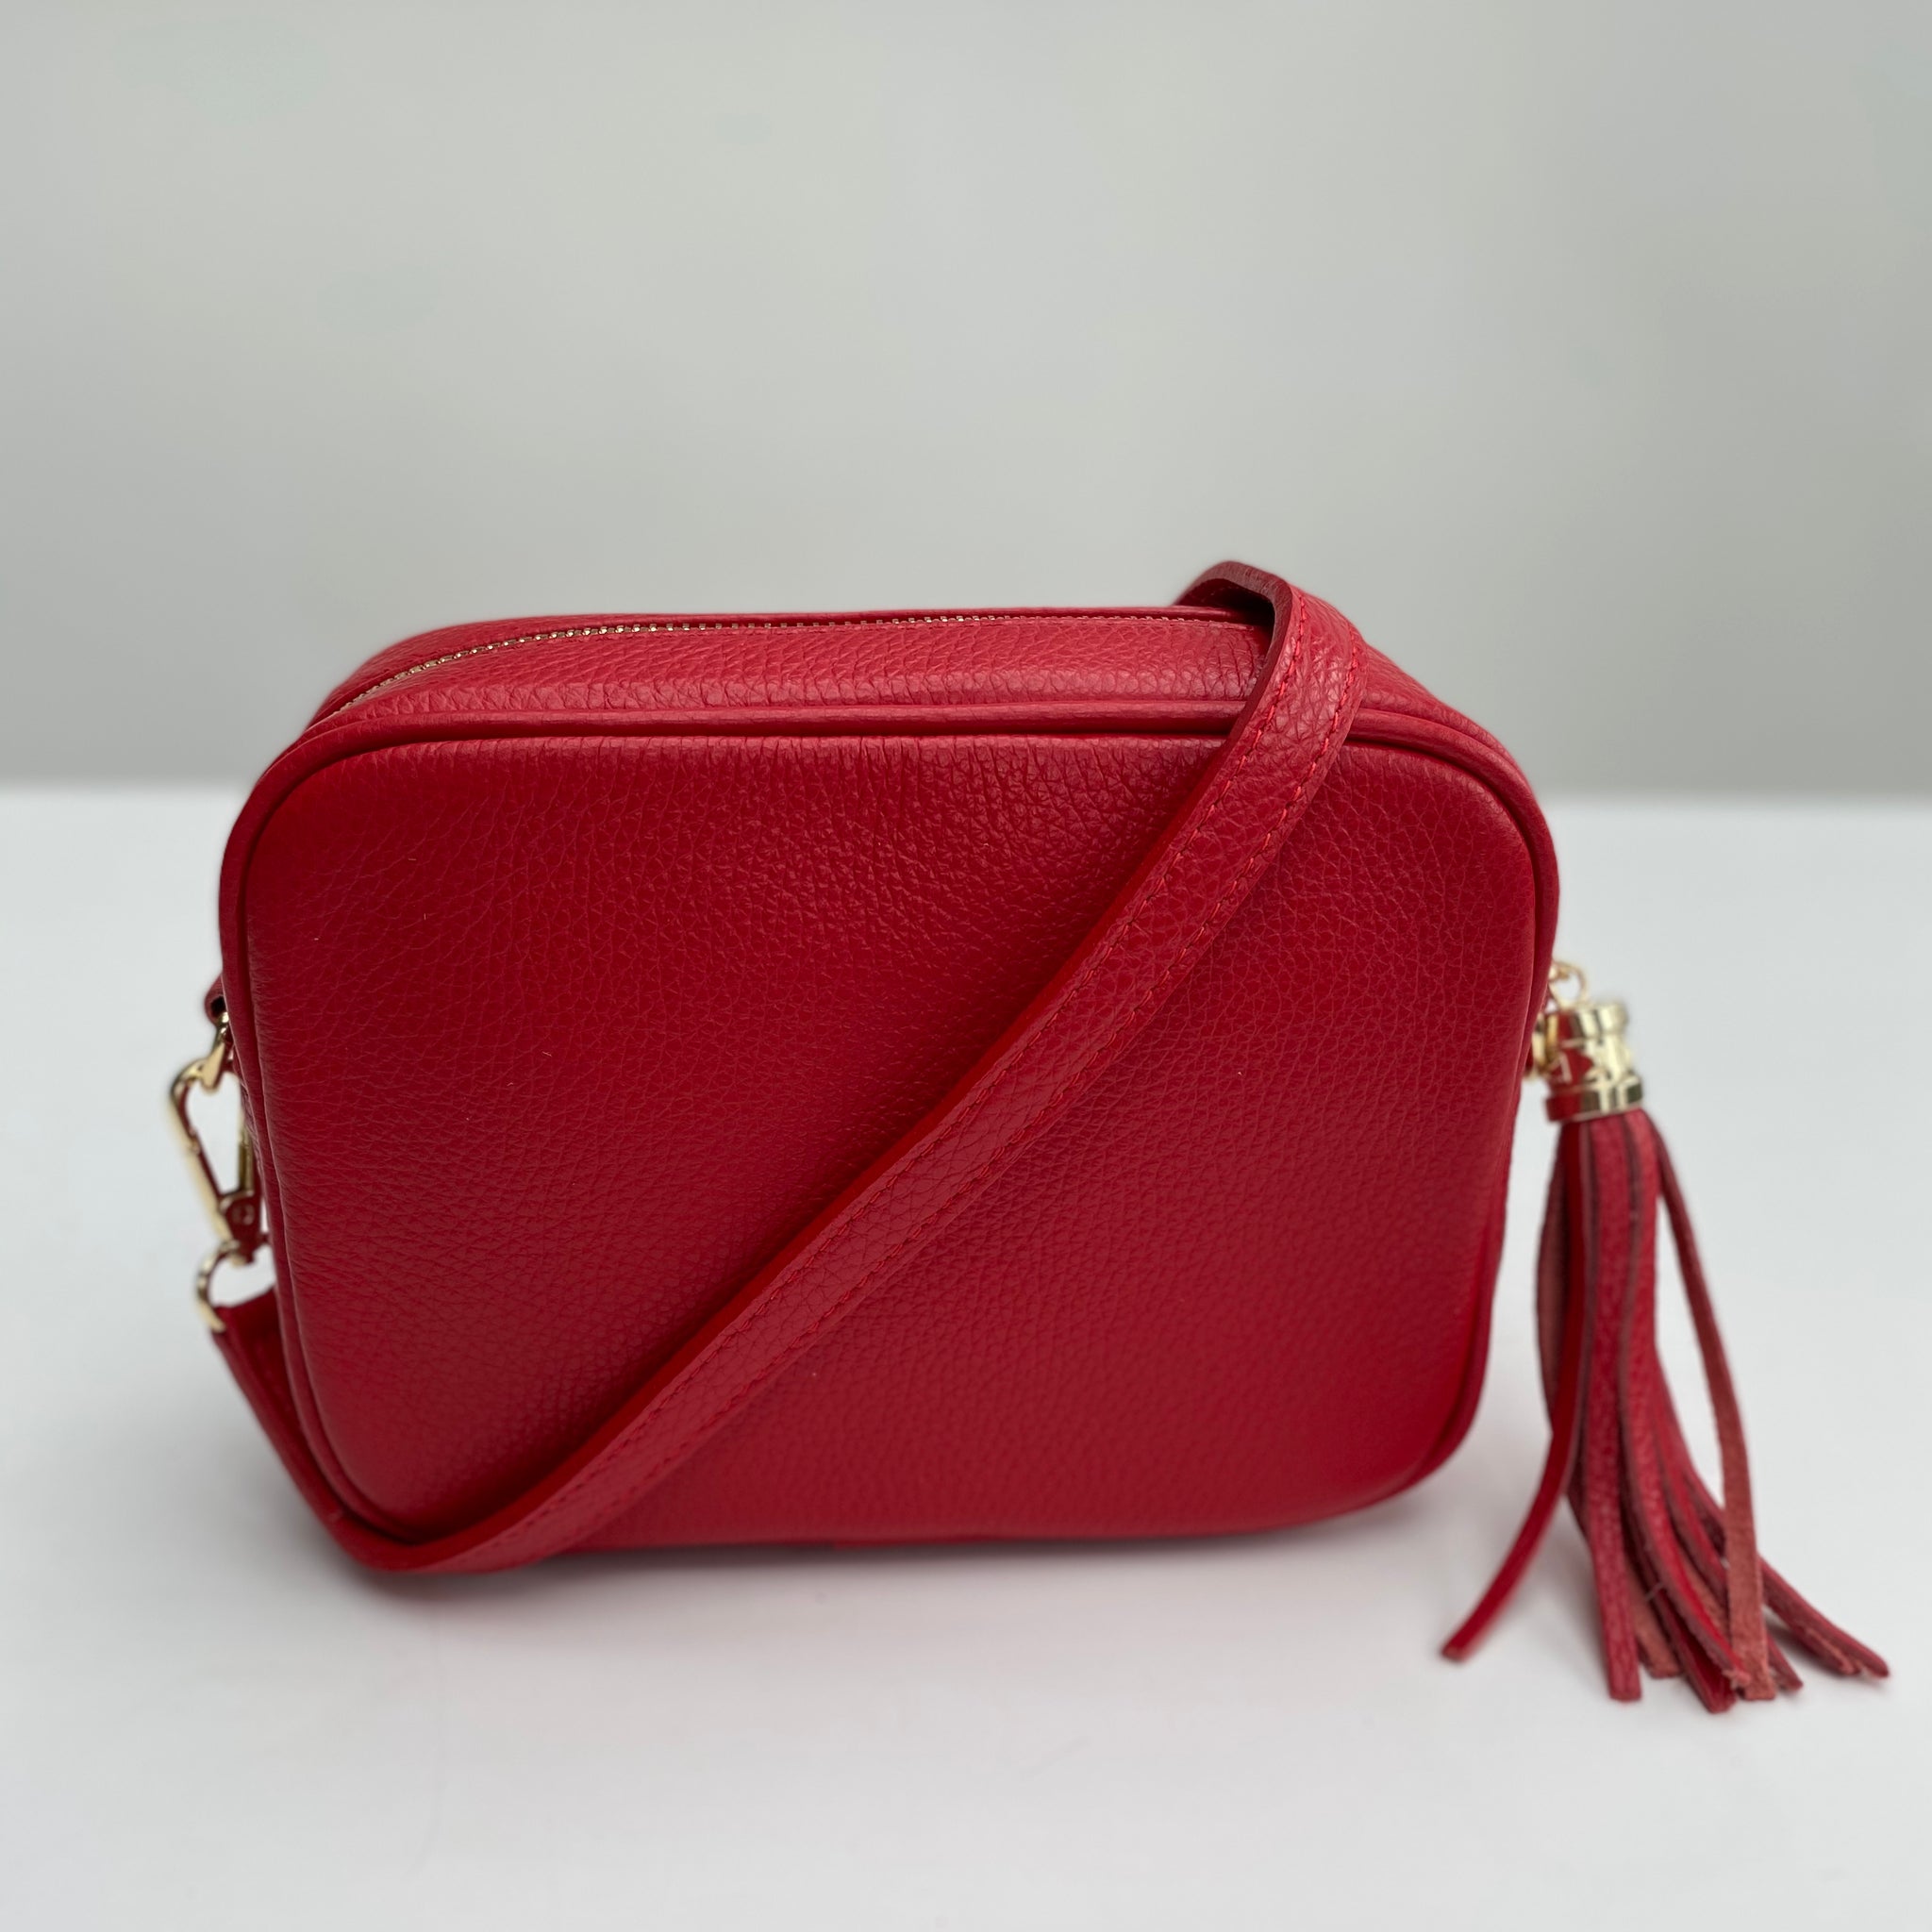 Red Leather Tassel Cross Body Bag